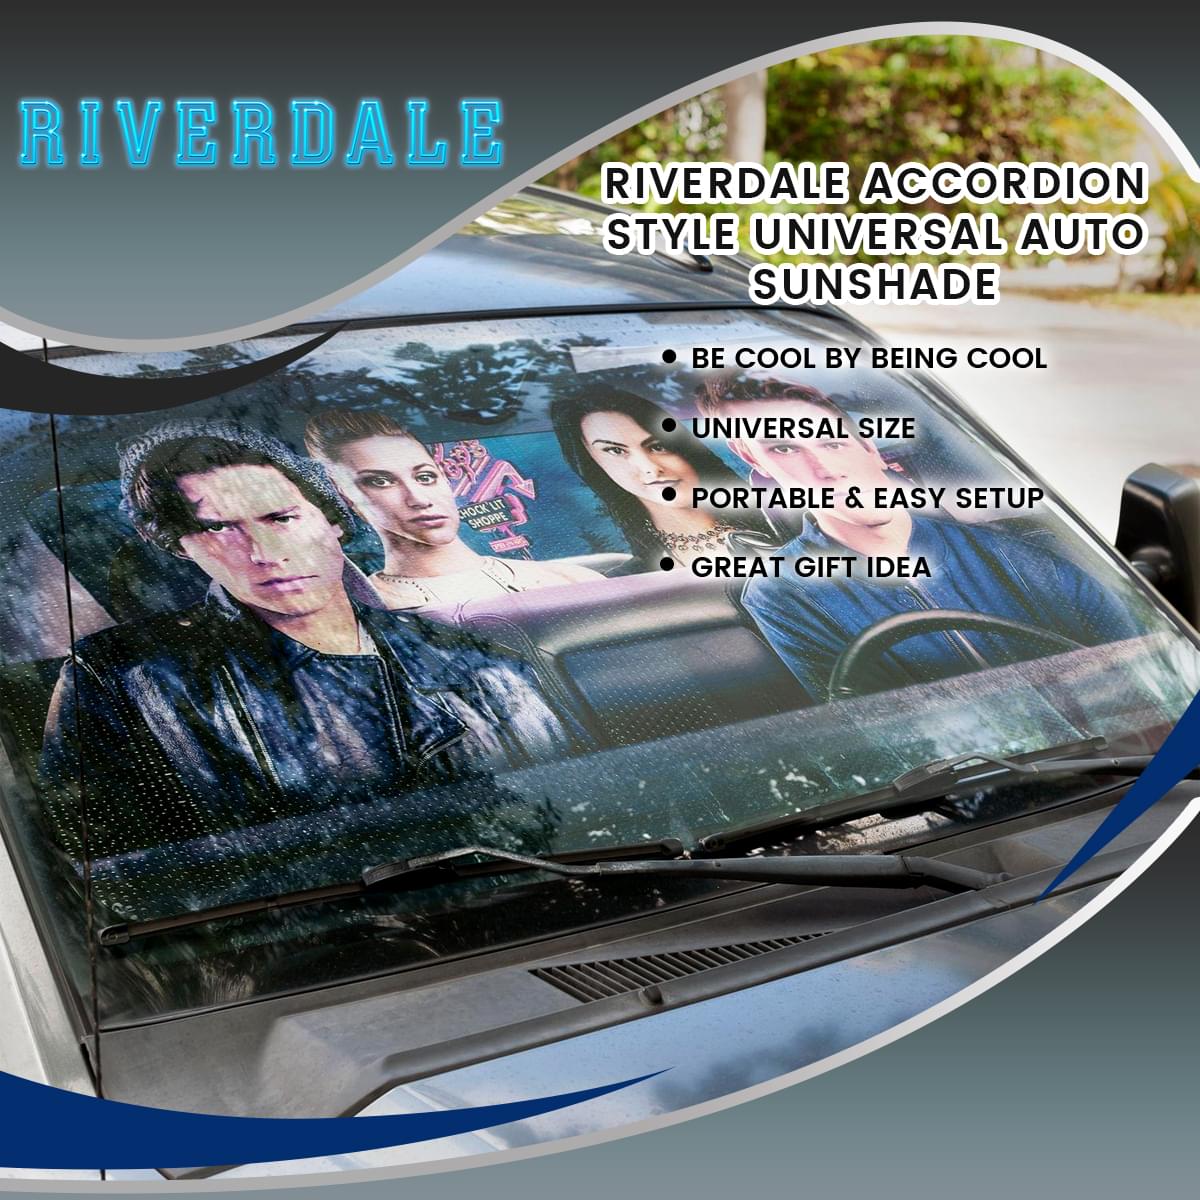 Riverdale Accordion Style Universal Auto Sunshade